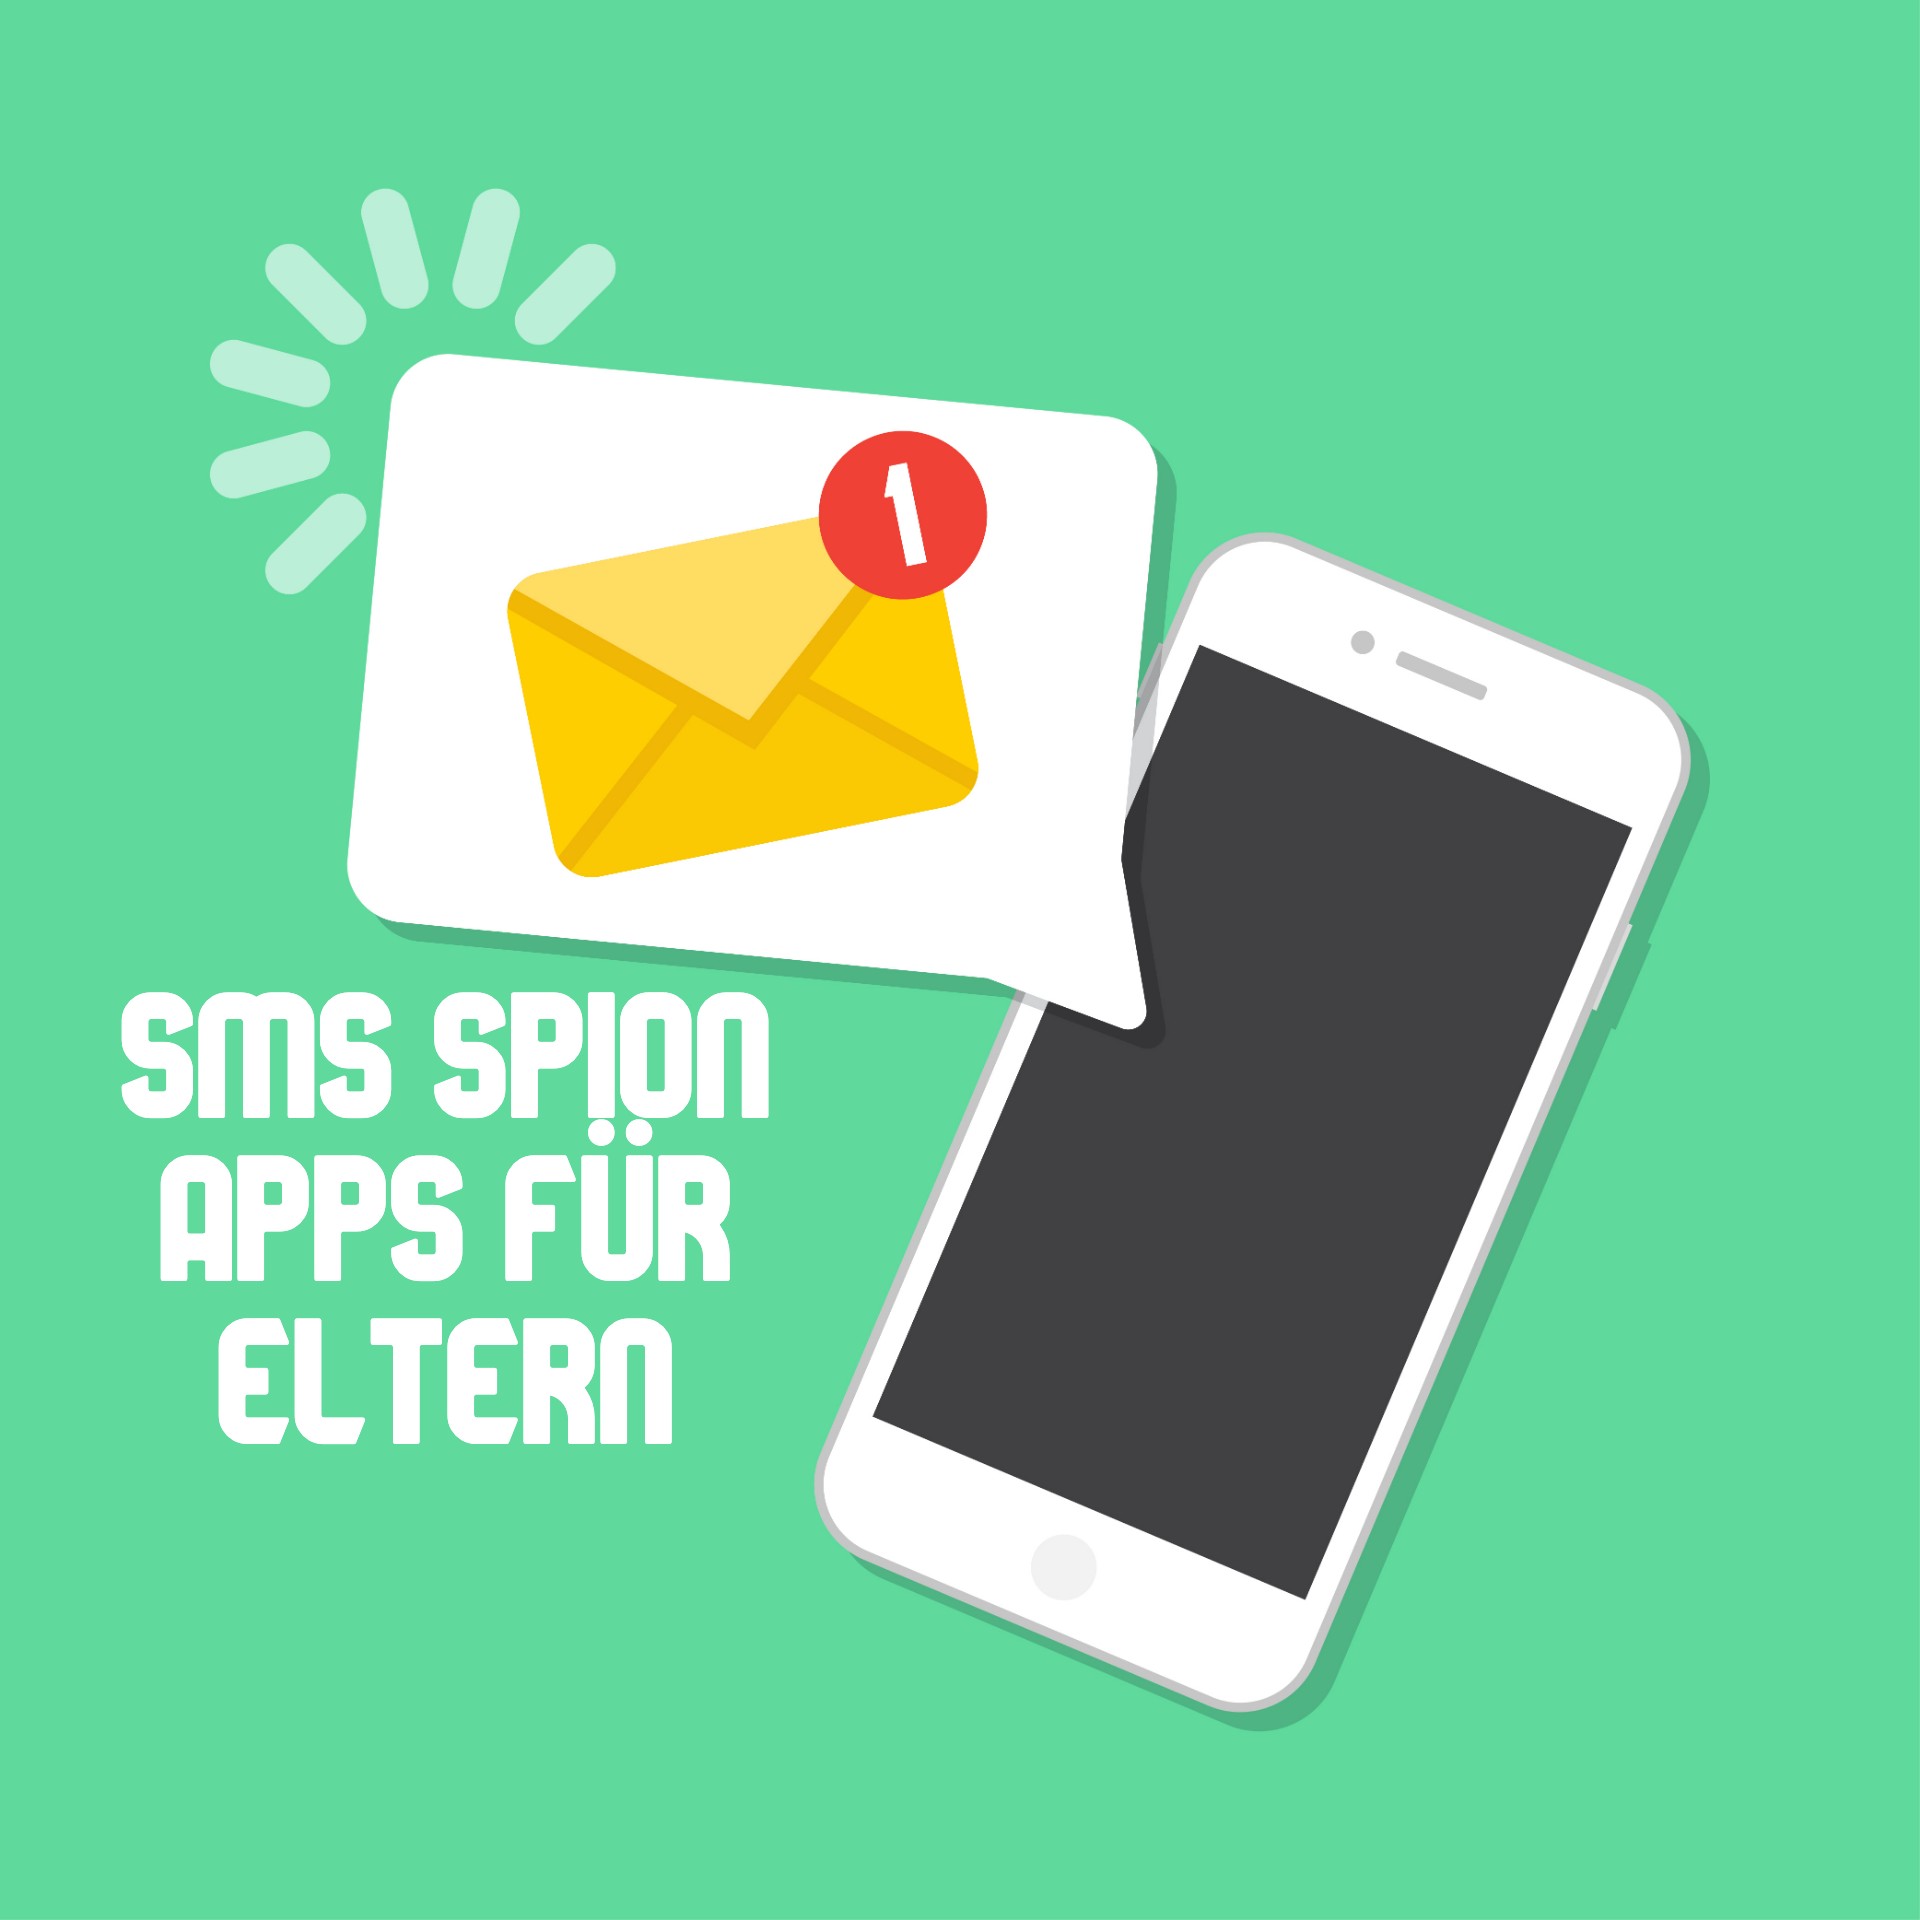 SMS Spion Apps